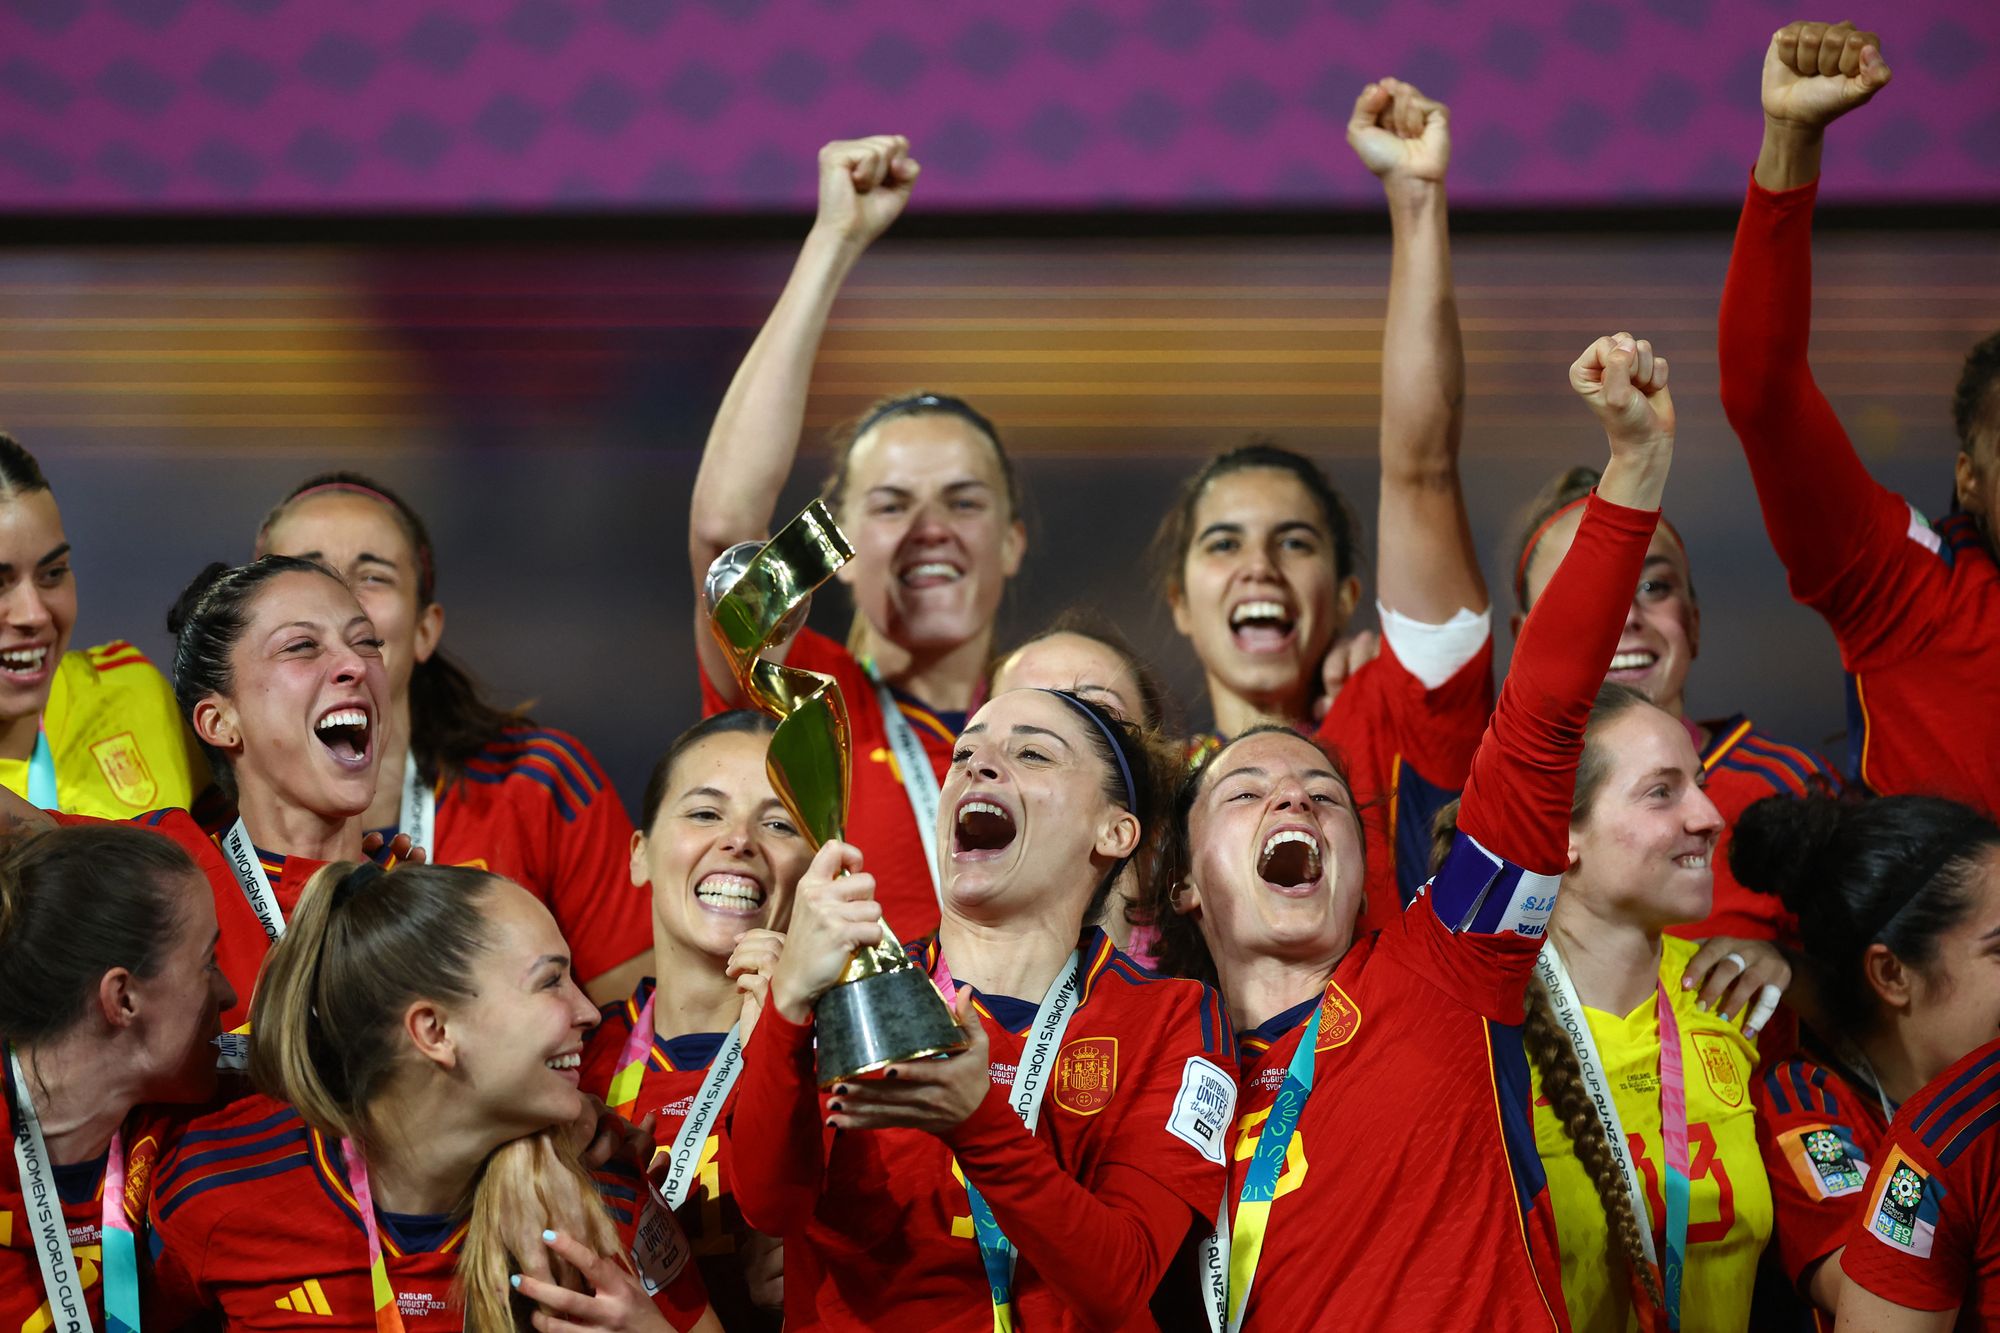 Spain Women's World Cup